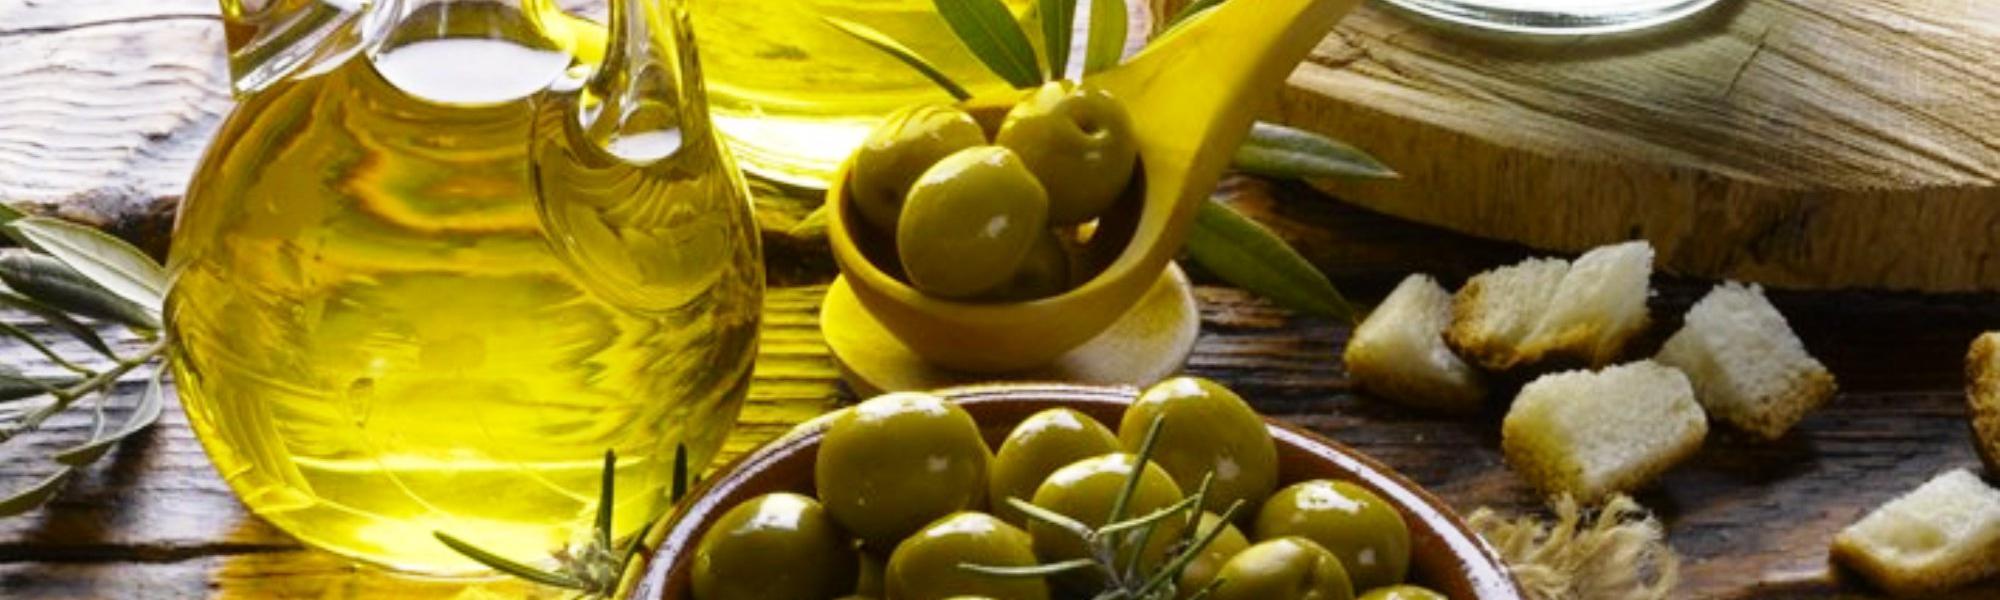 Degustazione olio extravergine di oliva per gruppi in Ostuni Puglia 0